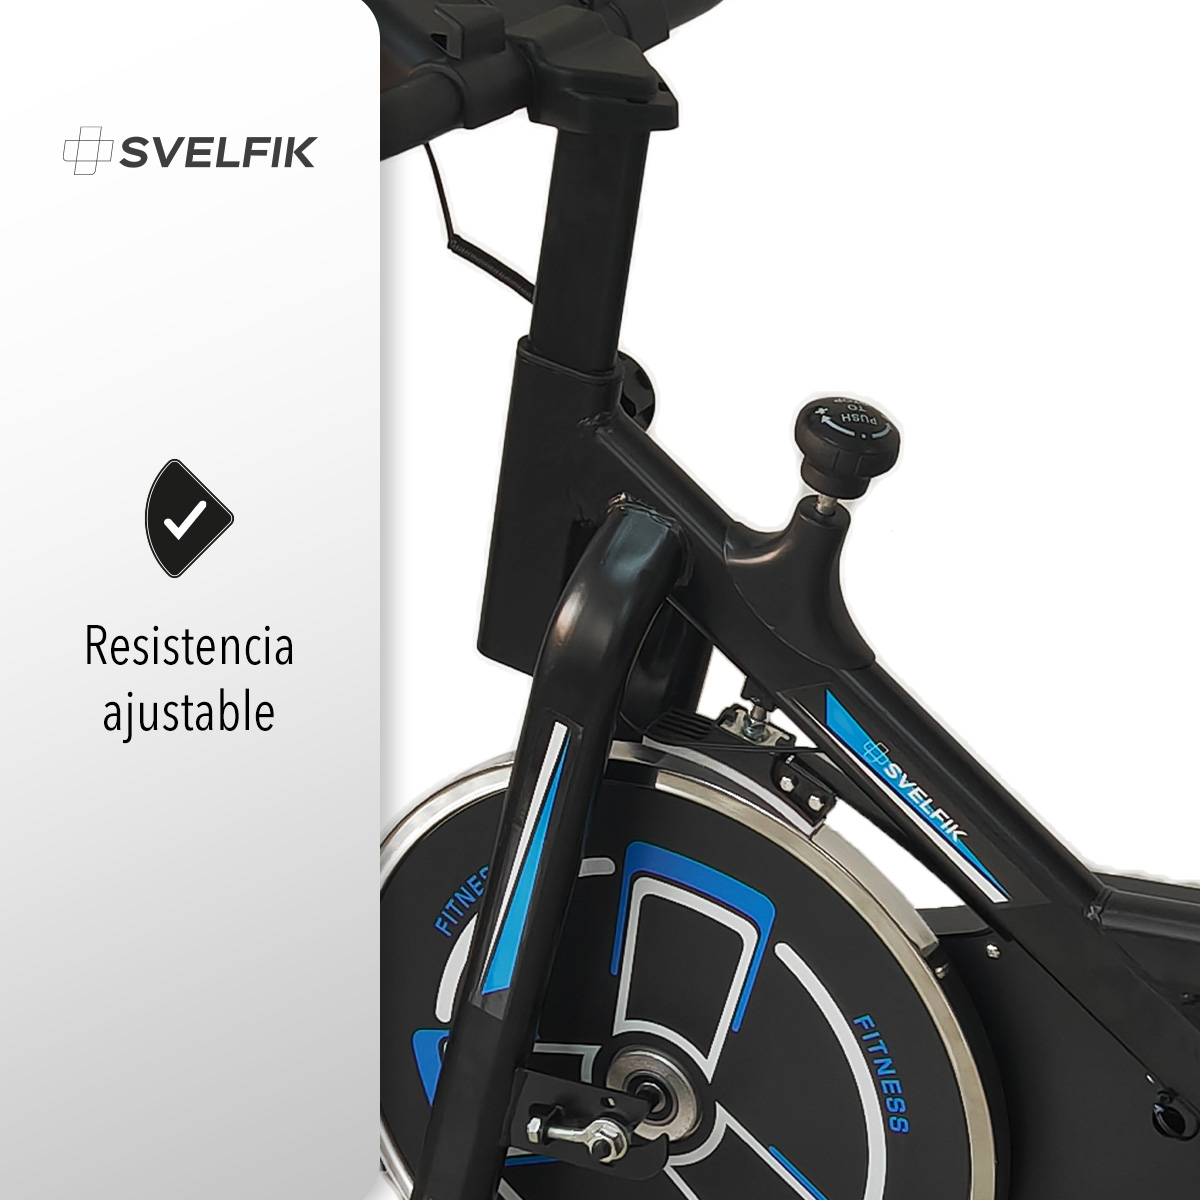 Bicicleta fija para spinning Svelfik - Spin Fit 6kg Azul lite